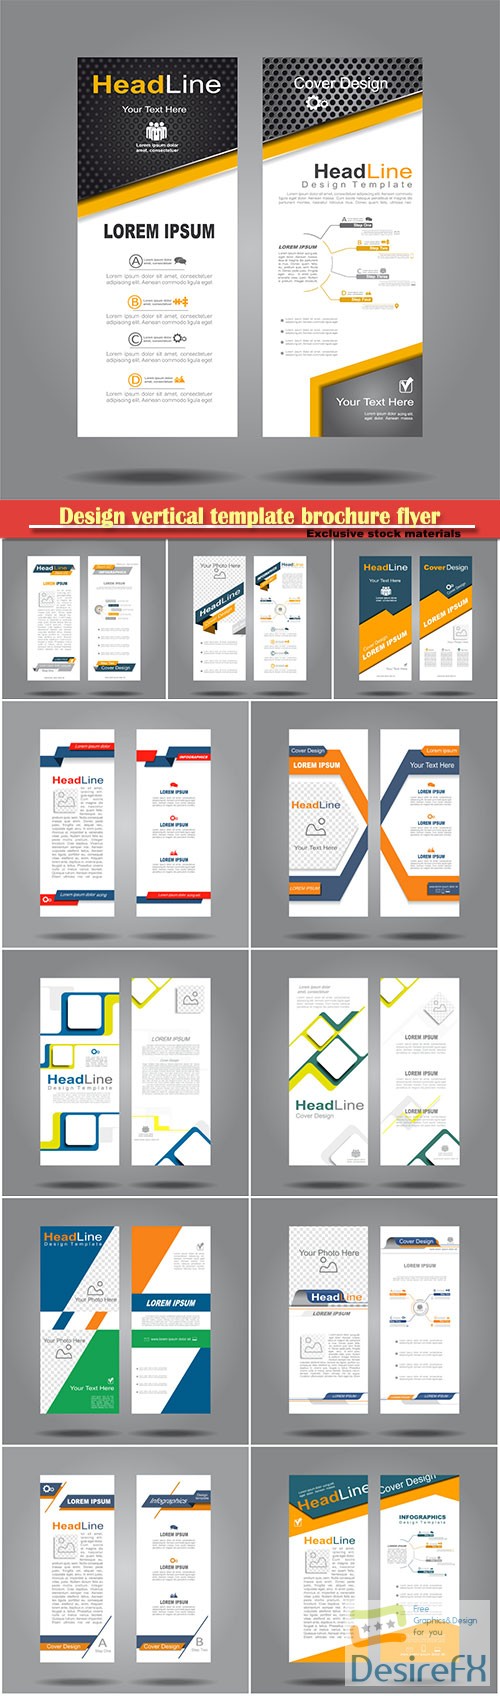 Design vertical template brochure flyer vector banner